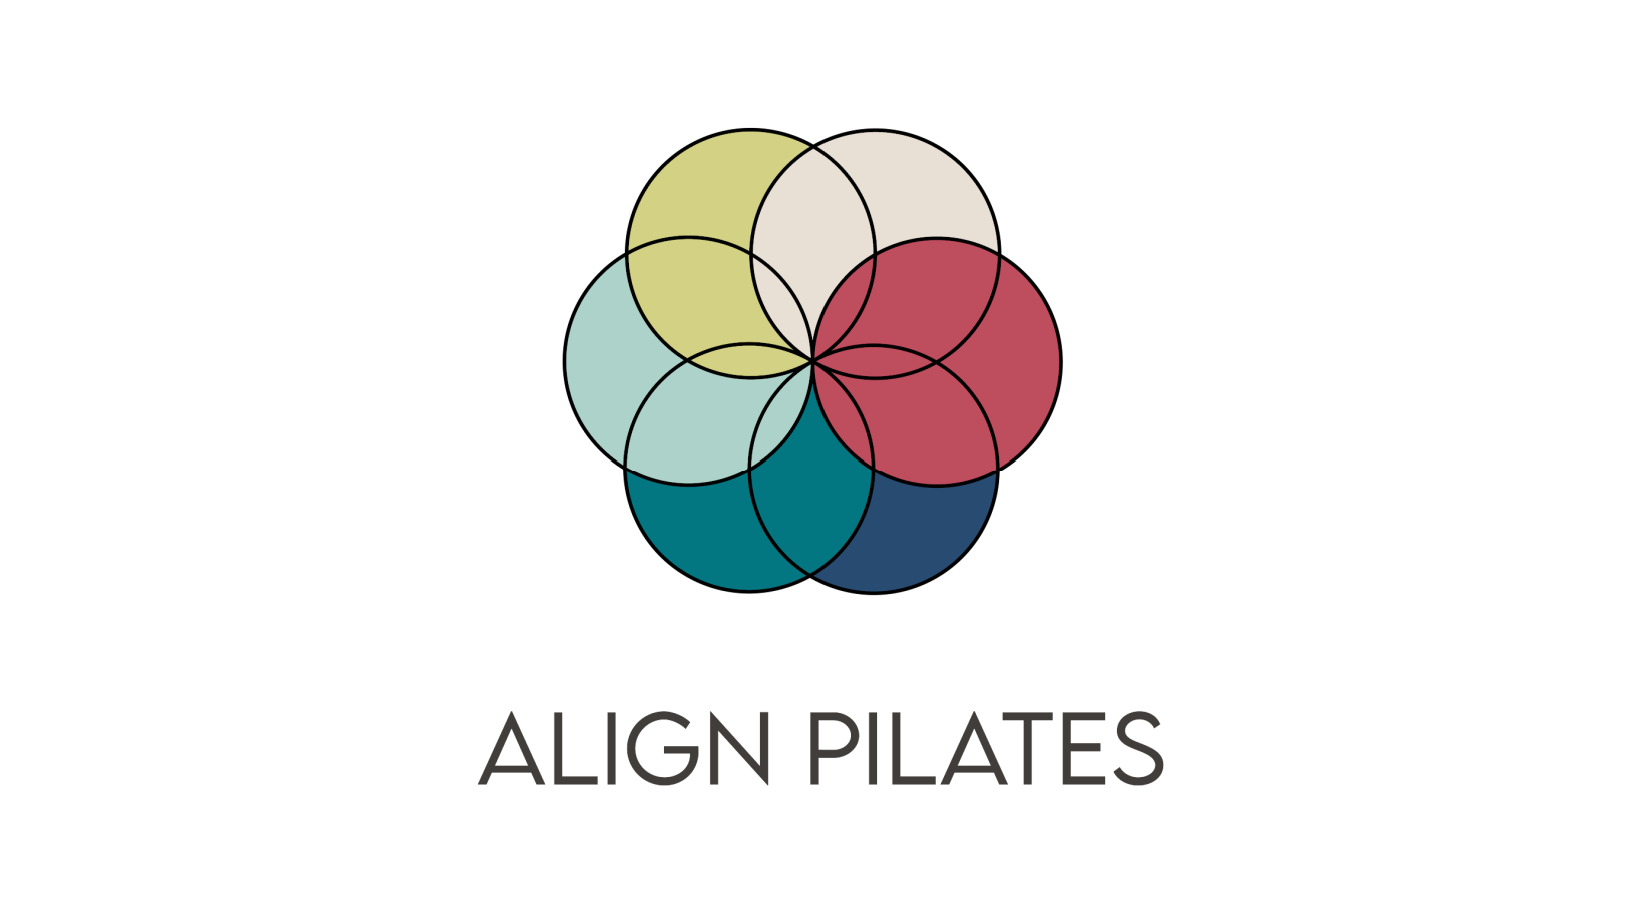 Align Pilates in Hoboken: A Review - Hoboken Girl